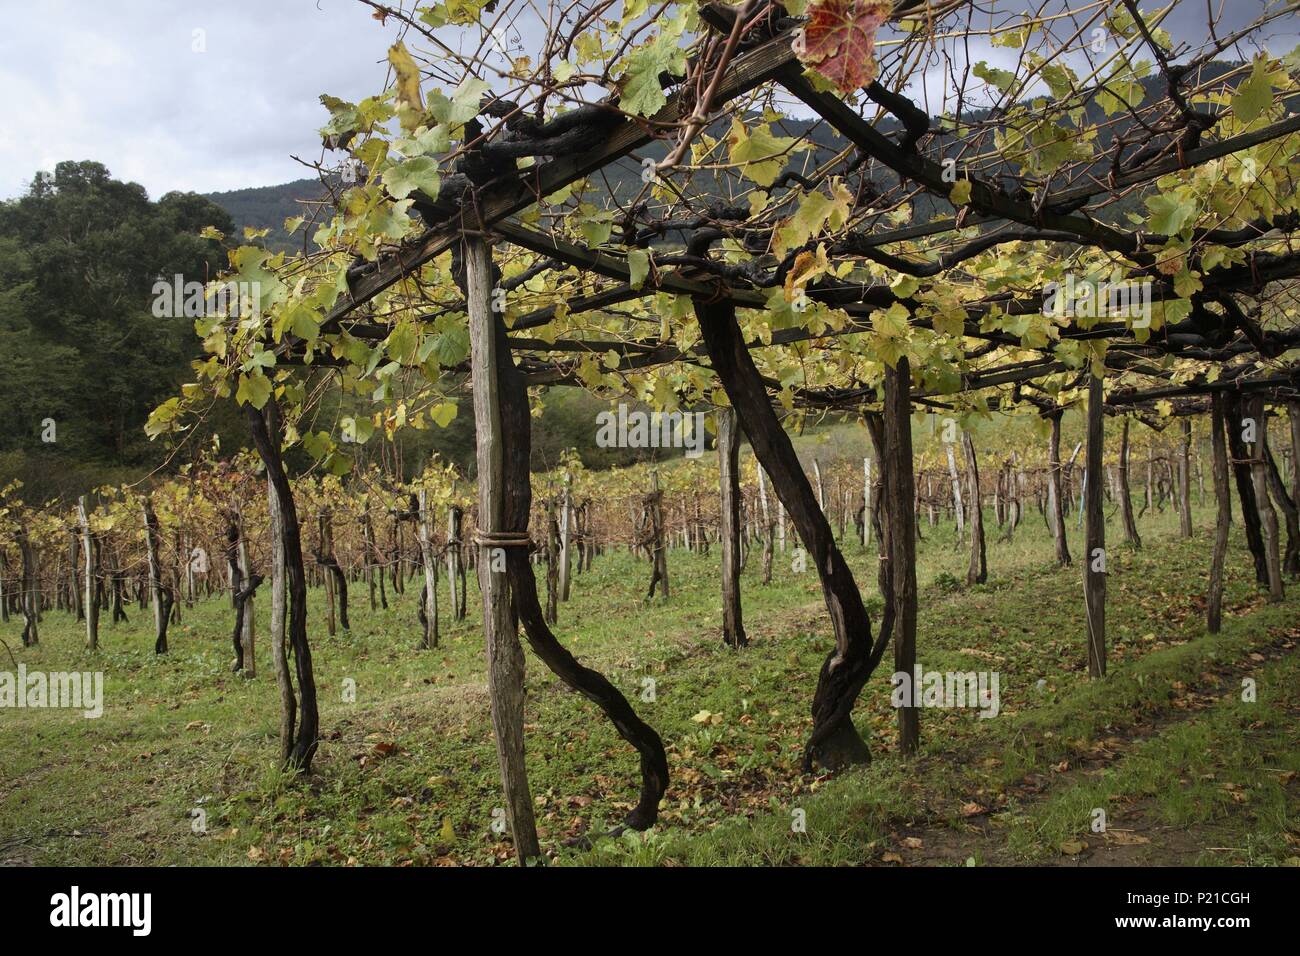 Spagna - Paese Basco - Munguia (distretto) - Golfo di Guascogna. Bakio / Baquio; viñedos para producir el vino txakoli "' (característico de la zona). Foto Stock